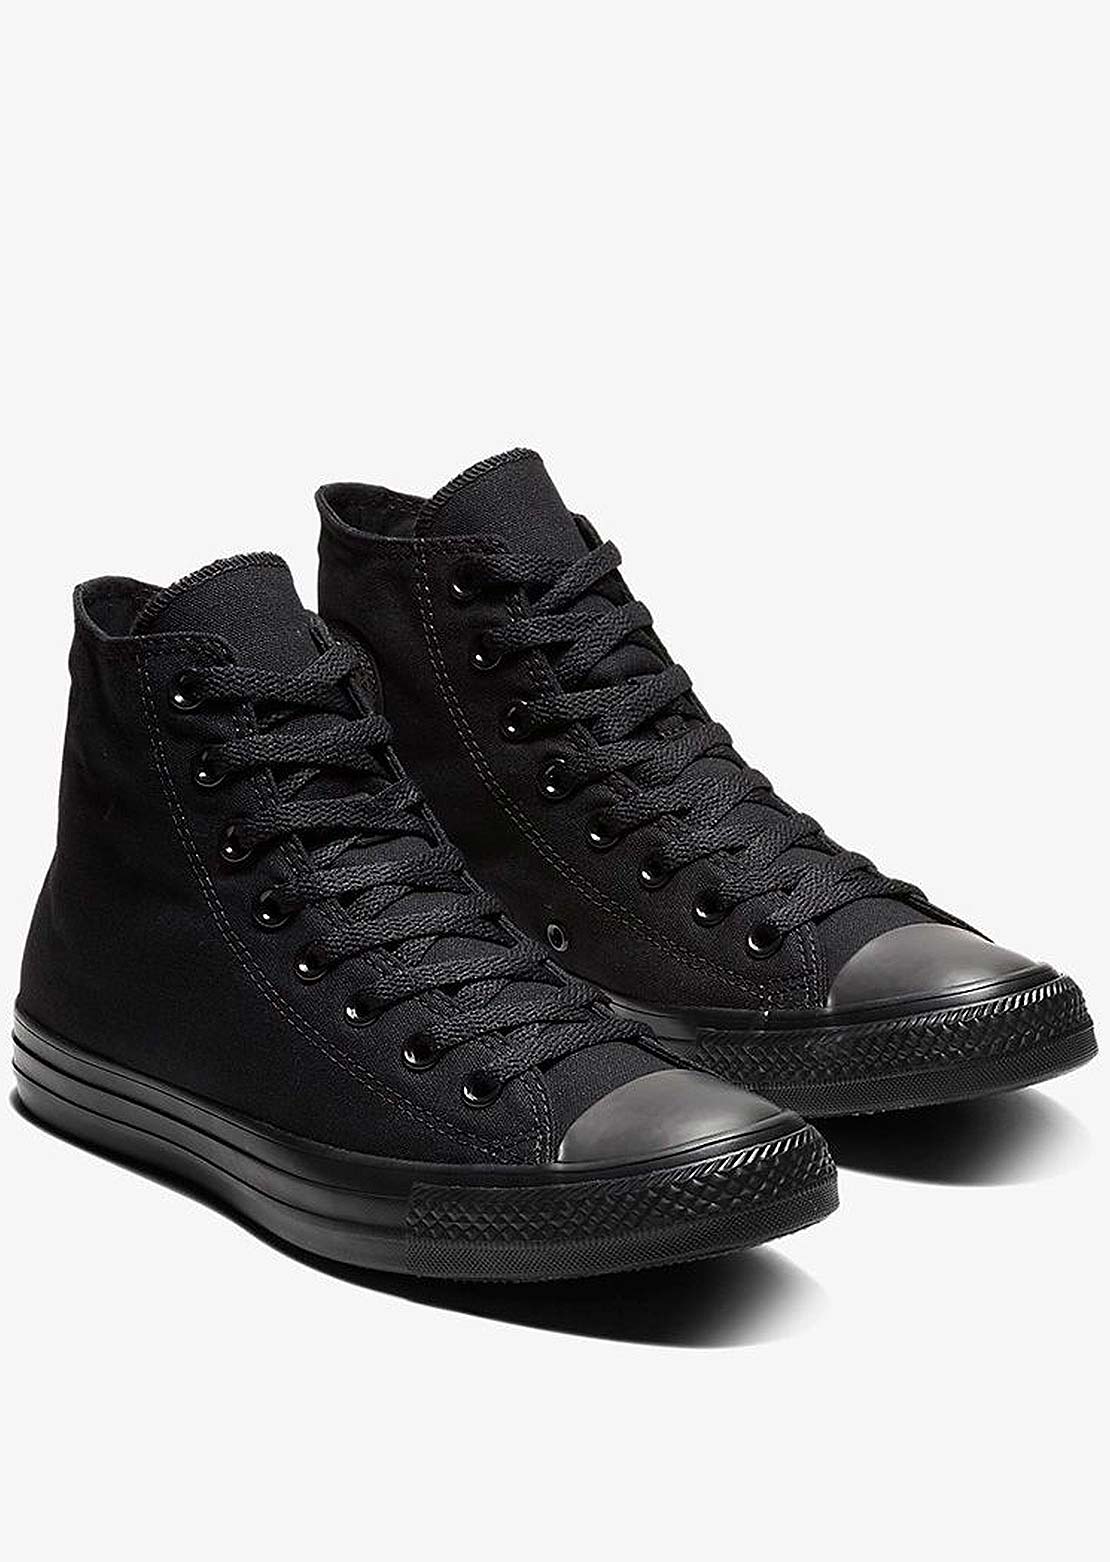 Converse Unisex Chuck Taylor All Star High-Top Shoes Black Monochrome